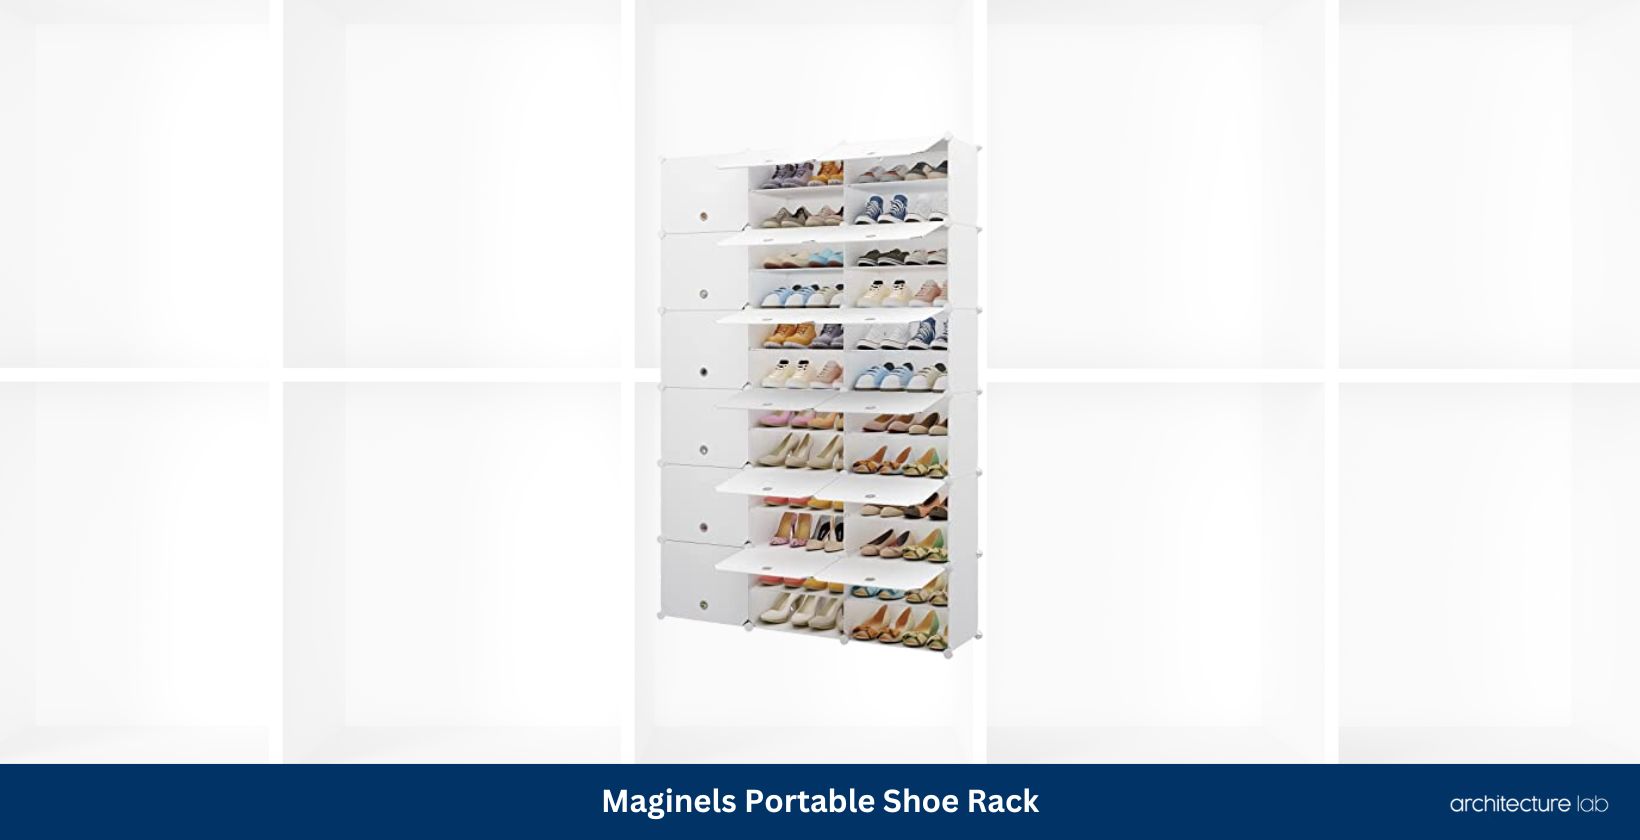 Maginels portable shoe rack